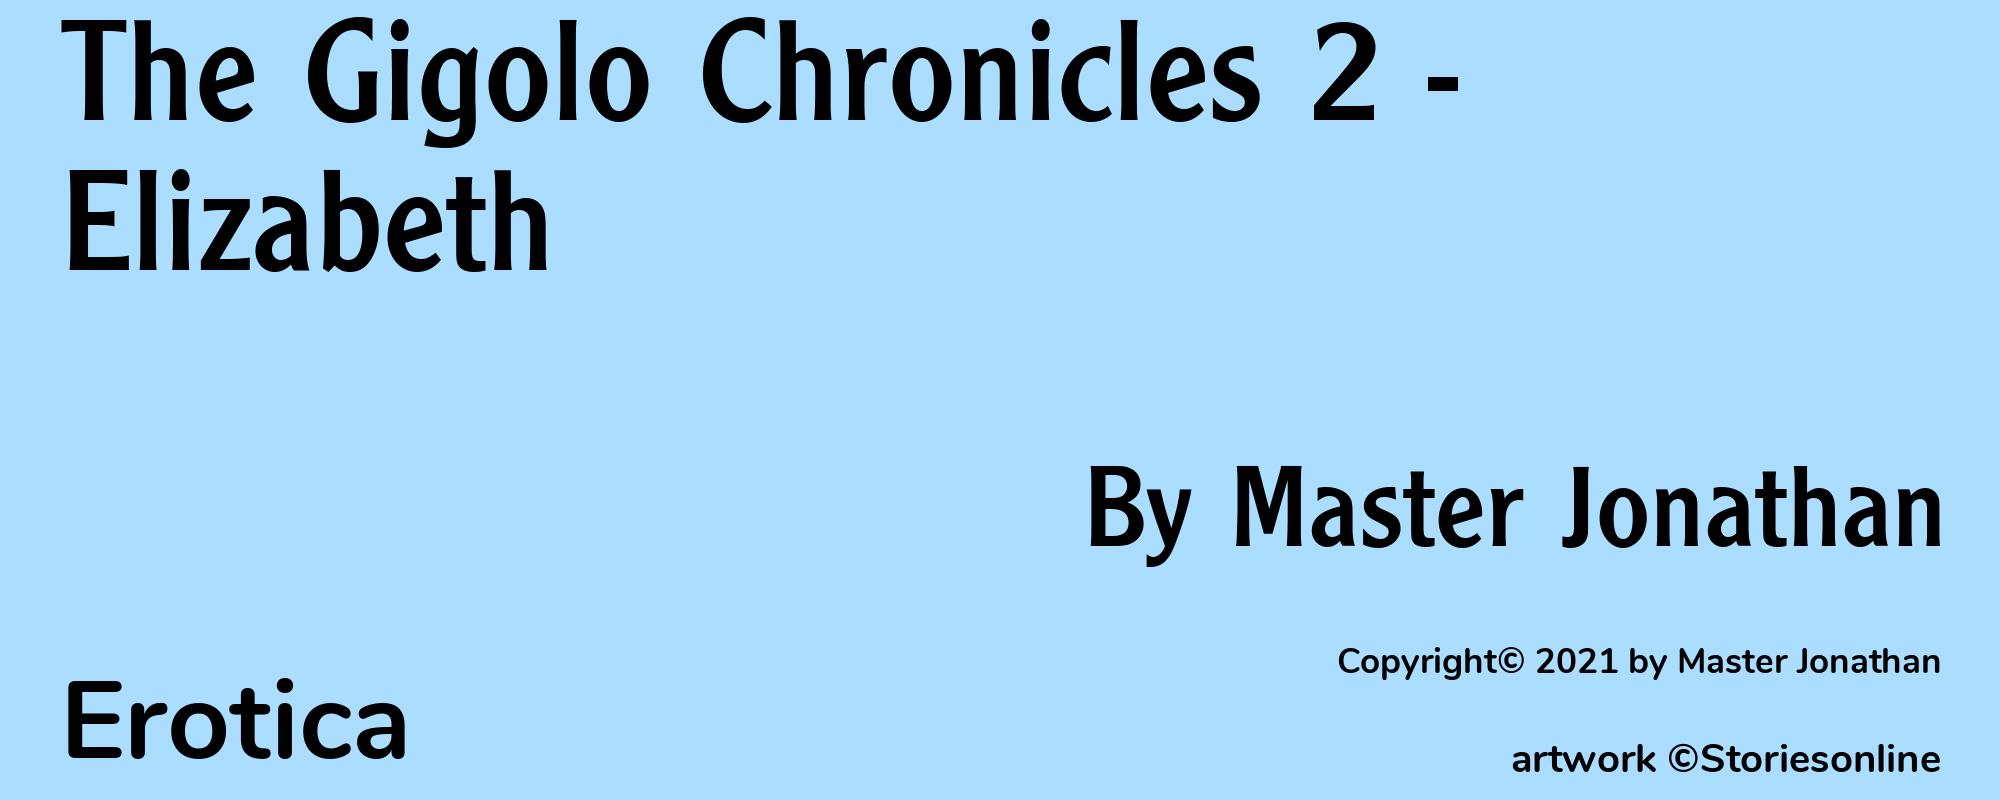 The Gigolo Chronicles 2 - Elizabeth - Cover